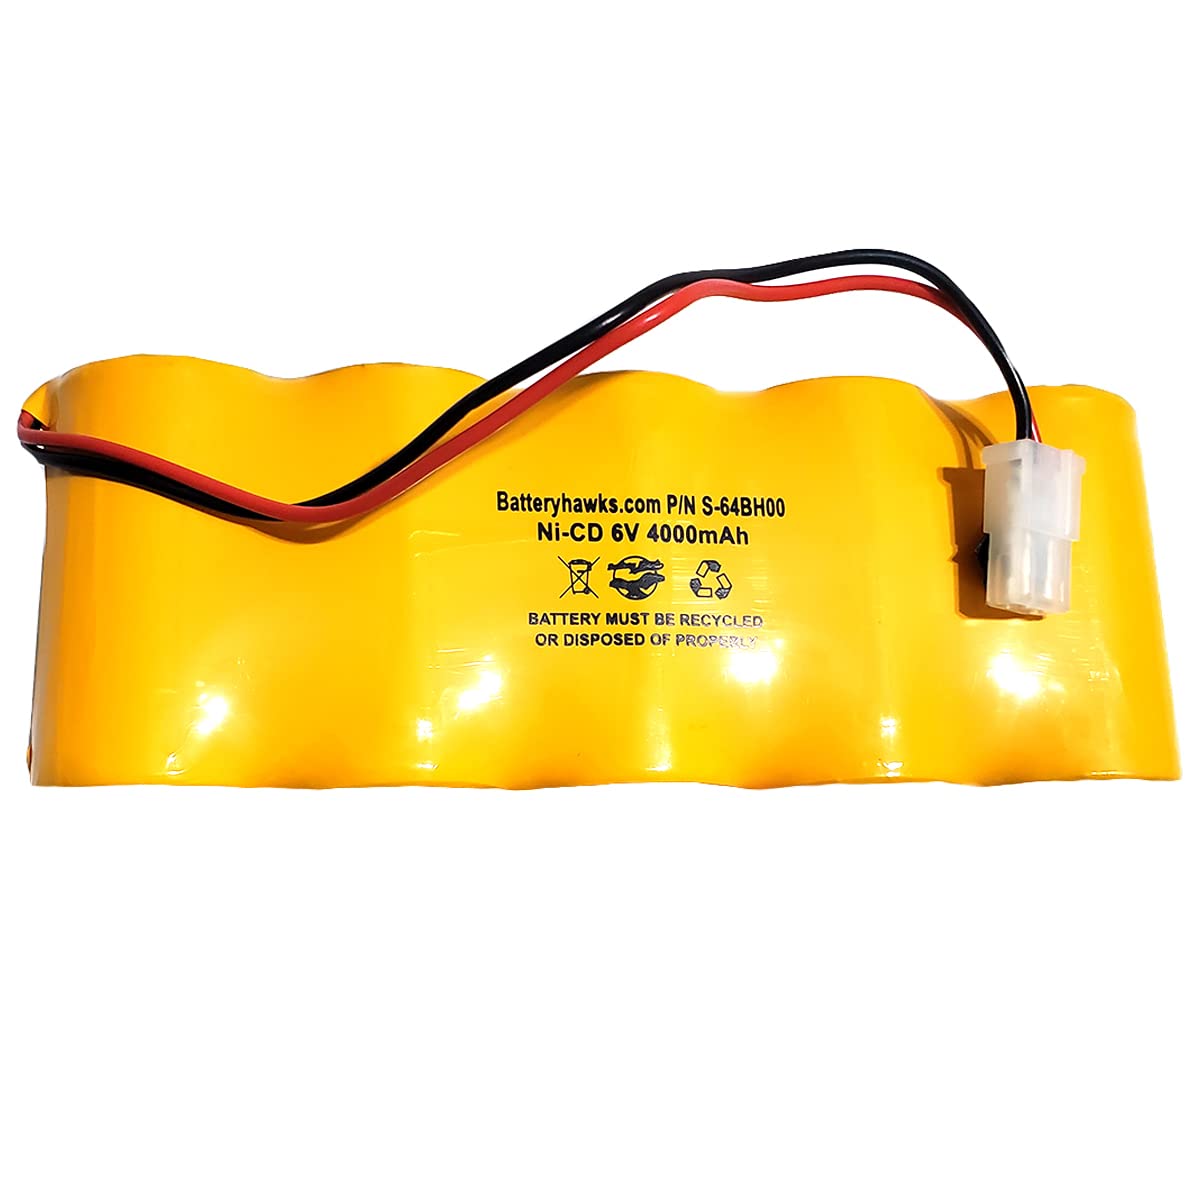 (Flat) ENB-0604 ENB0604 ELB0604N ELB-0604N 6v 4000mAh Ni-CD Battery Pack Replacement for Exit Sign Emergency Light